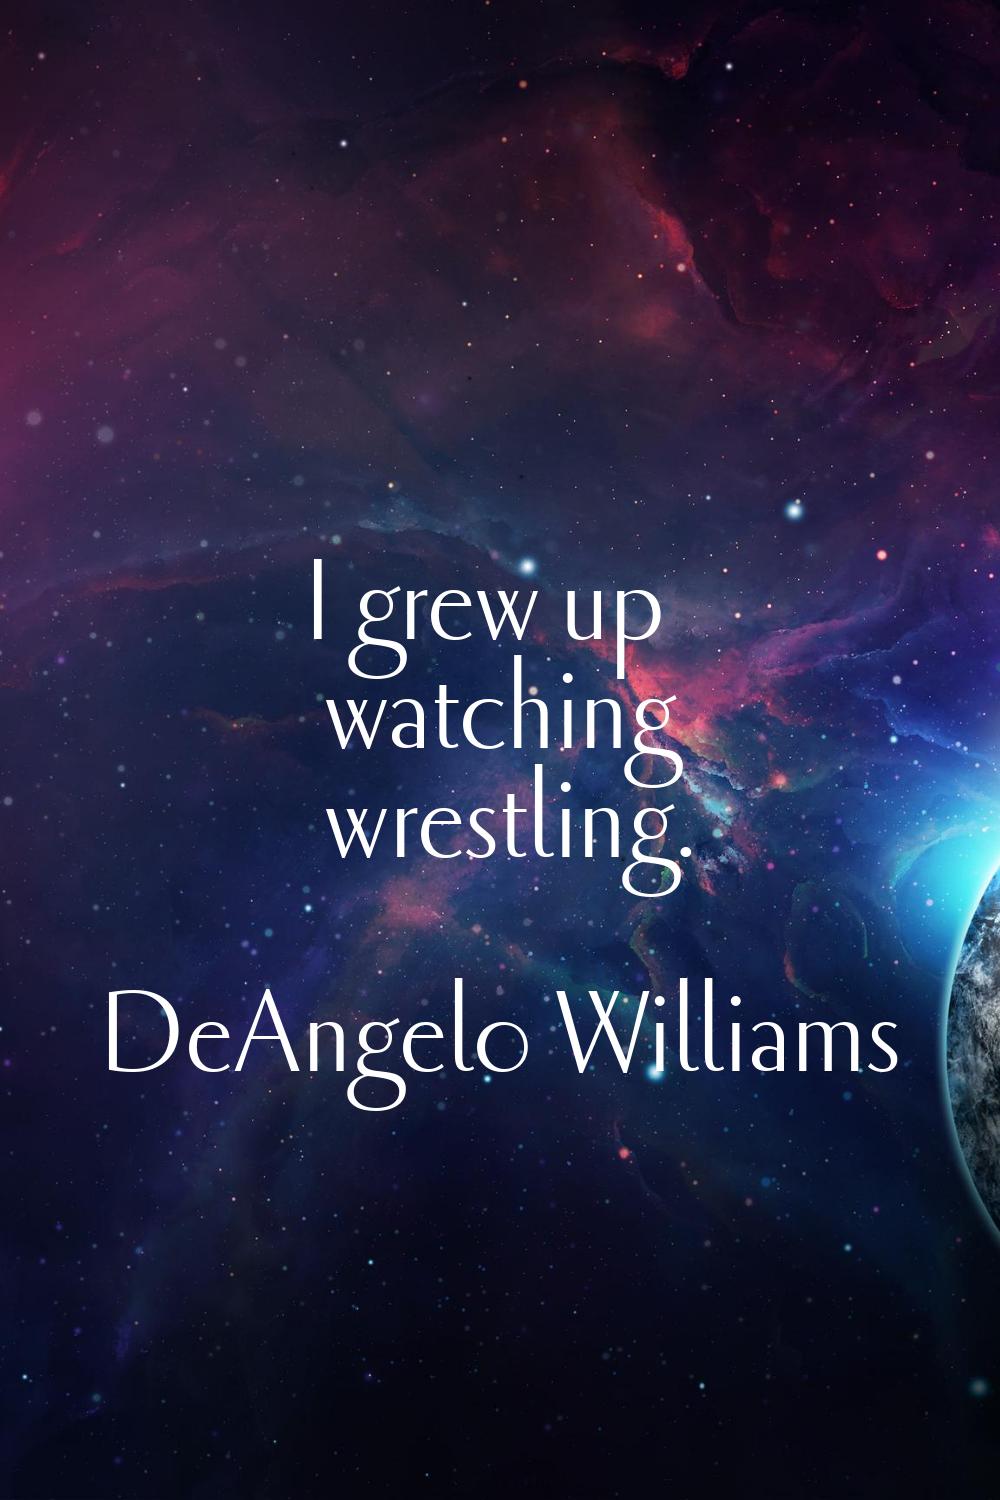 I grew up watching wrestling.